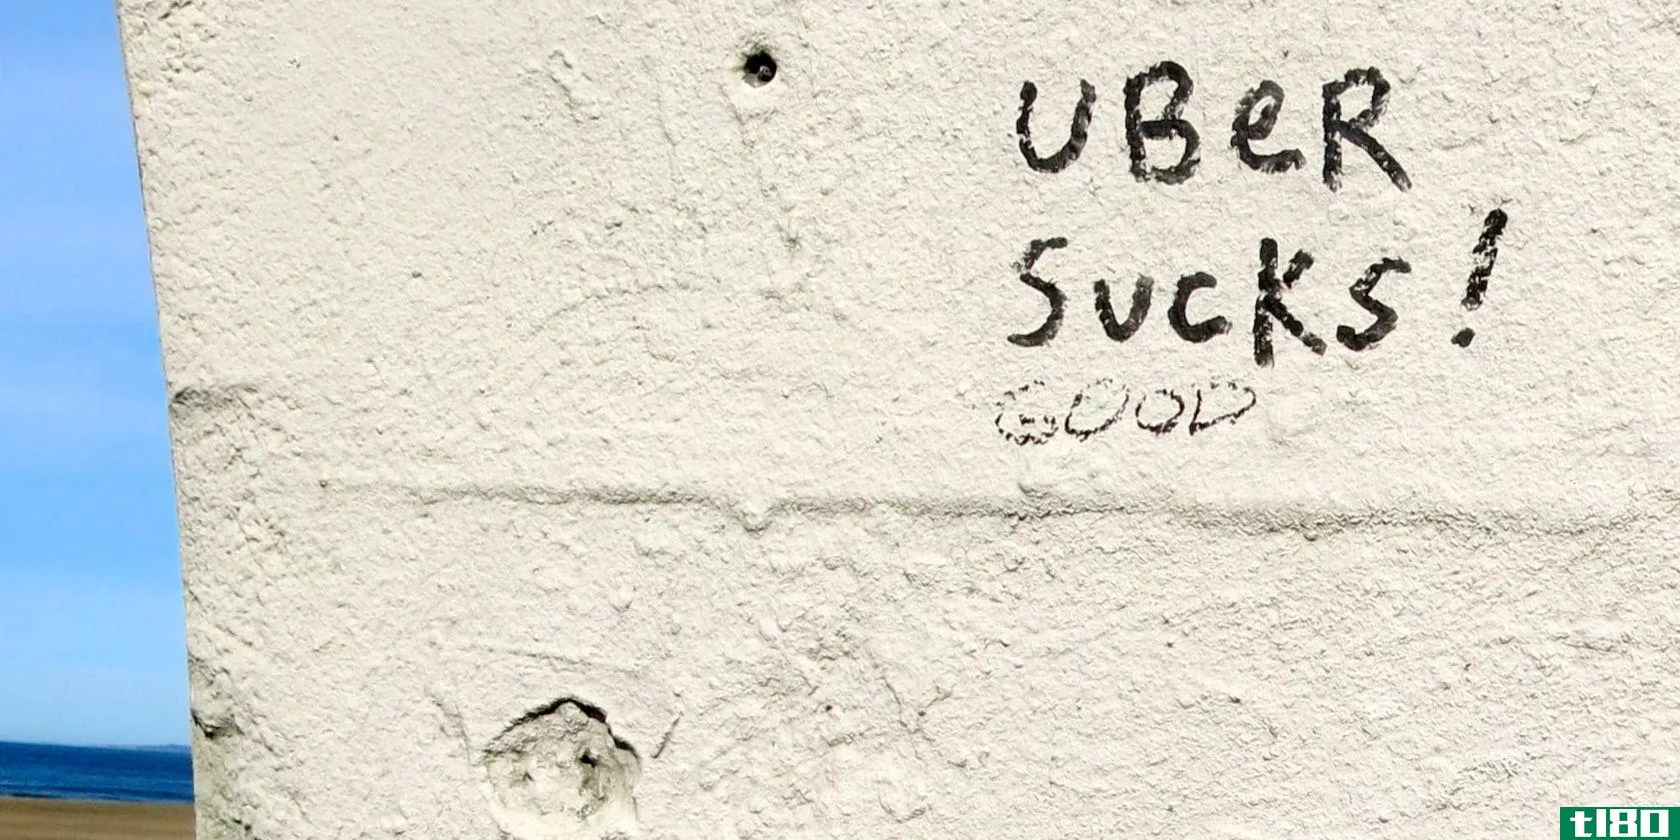 uber-sucks-graffiti